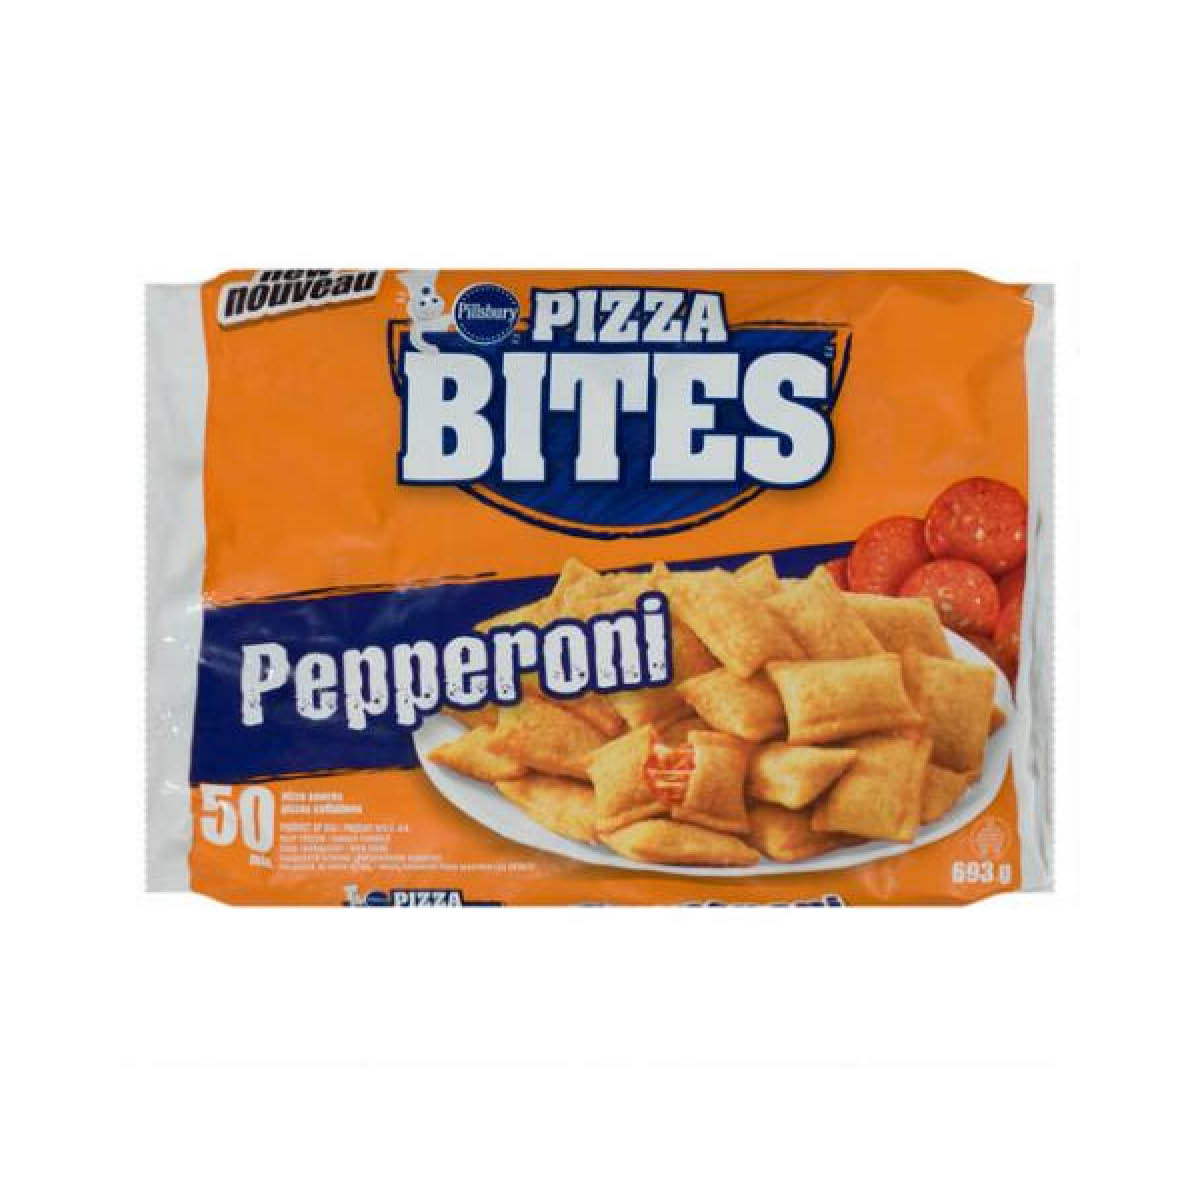 Pillsbury Pepperoni Pizza Bites, 693g